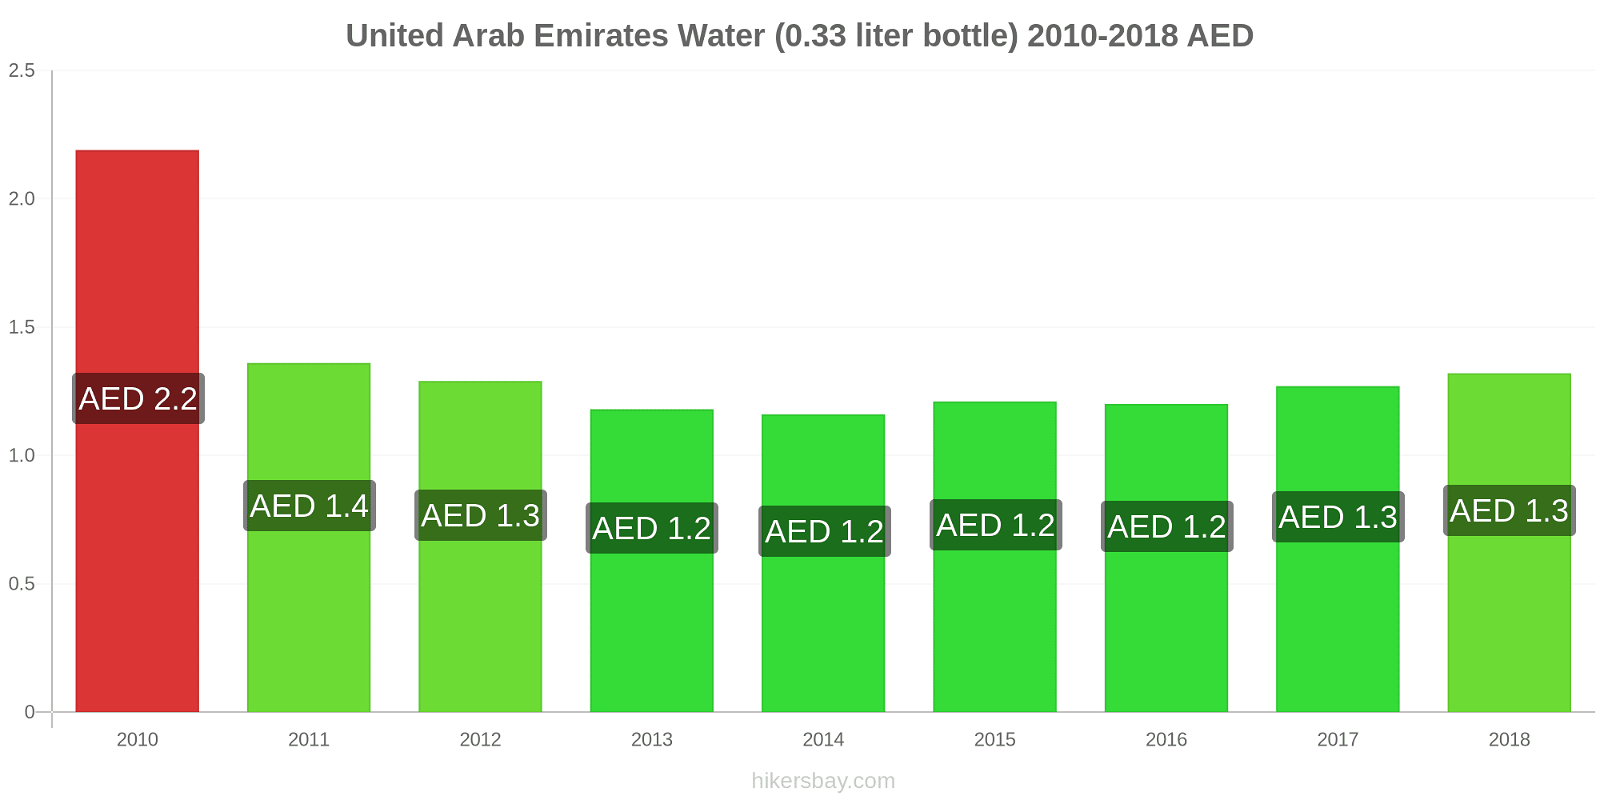 United Arab Emirates price changes Water (0.33 liter bottle) hikersbay.com